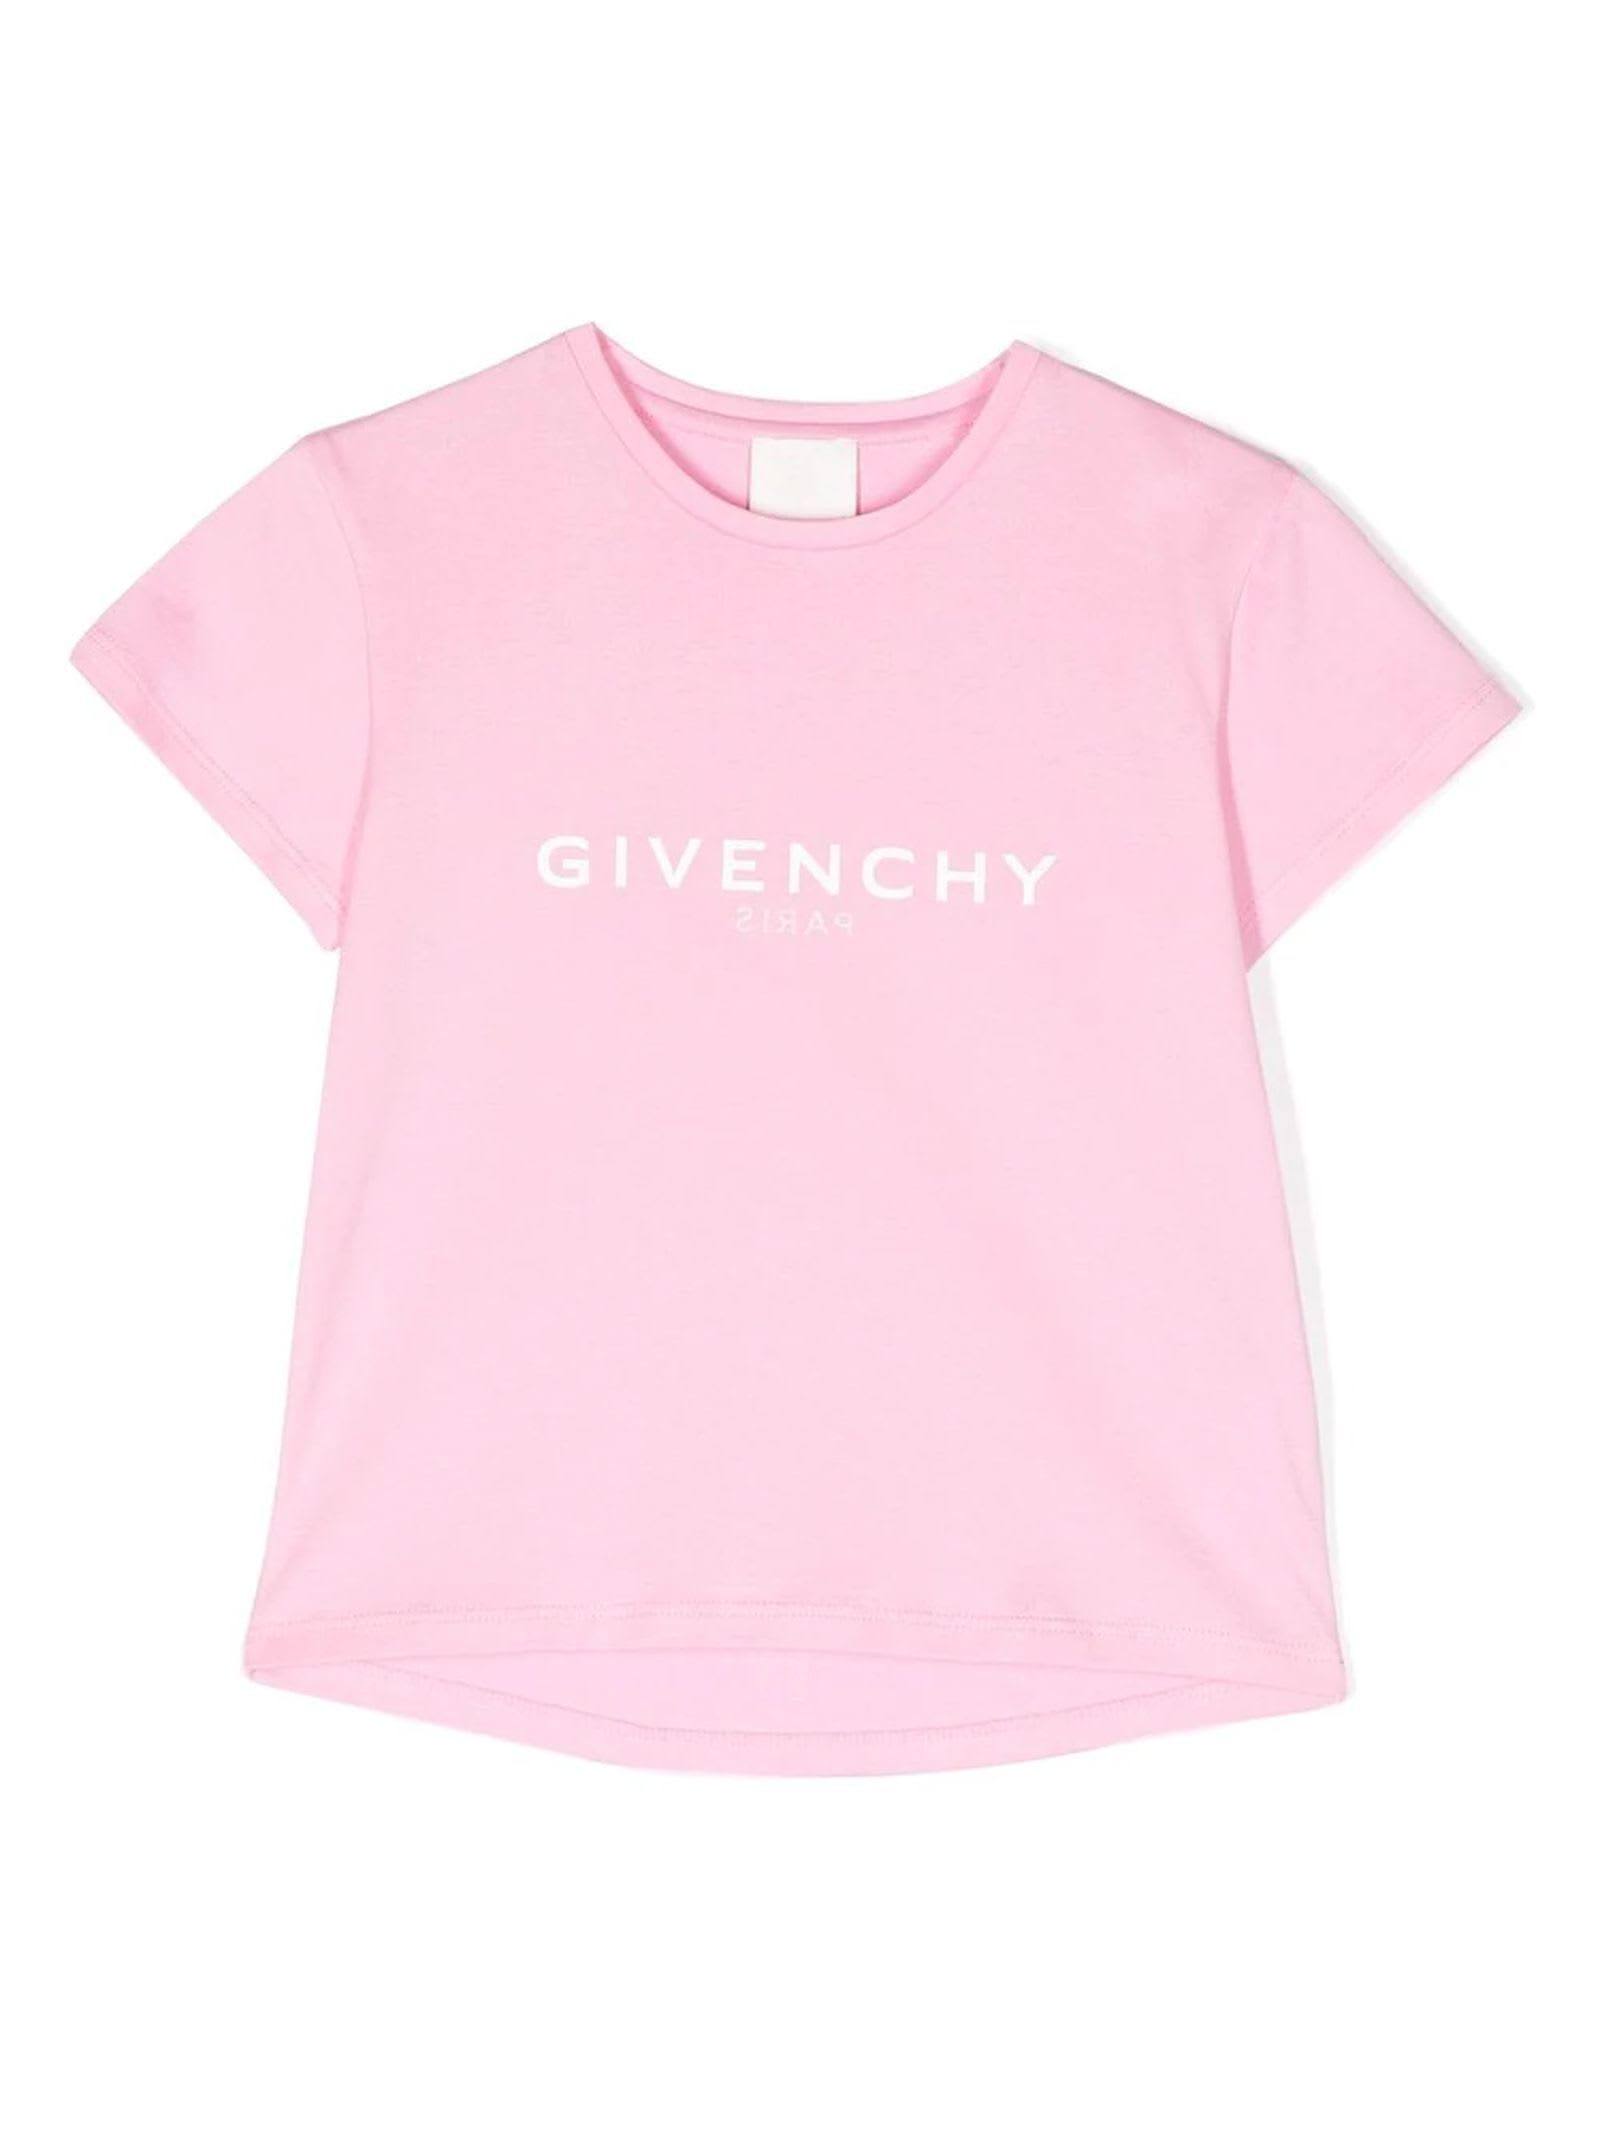 Givenchy Pink Cotton Tshirt